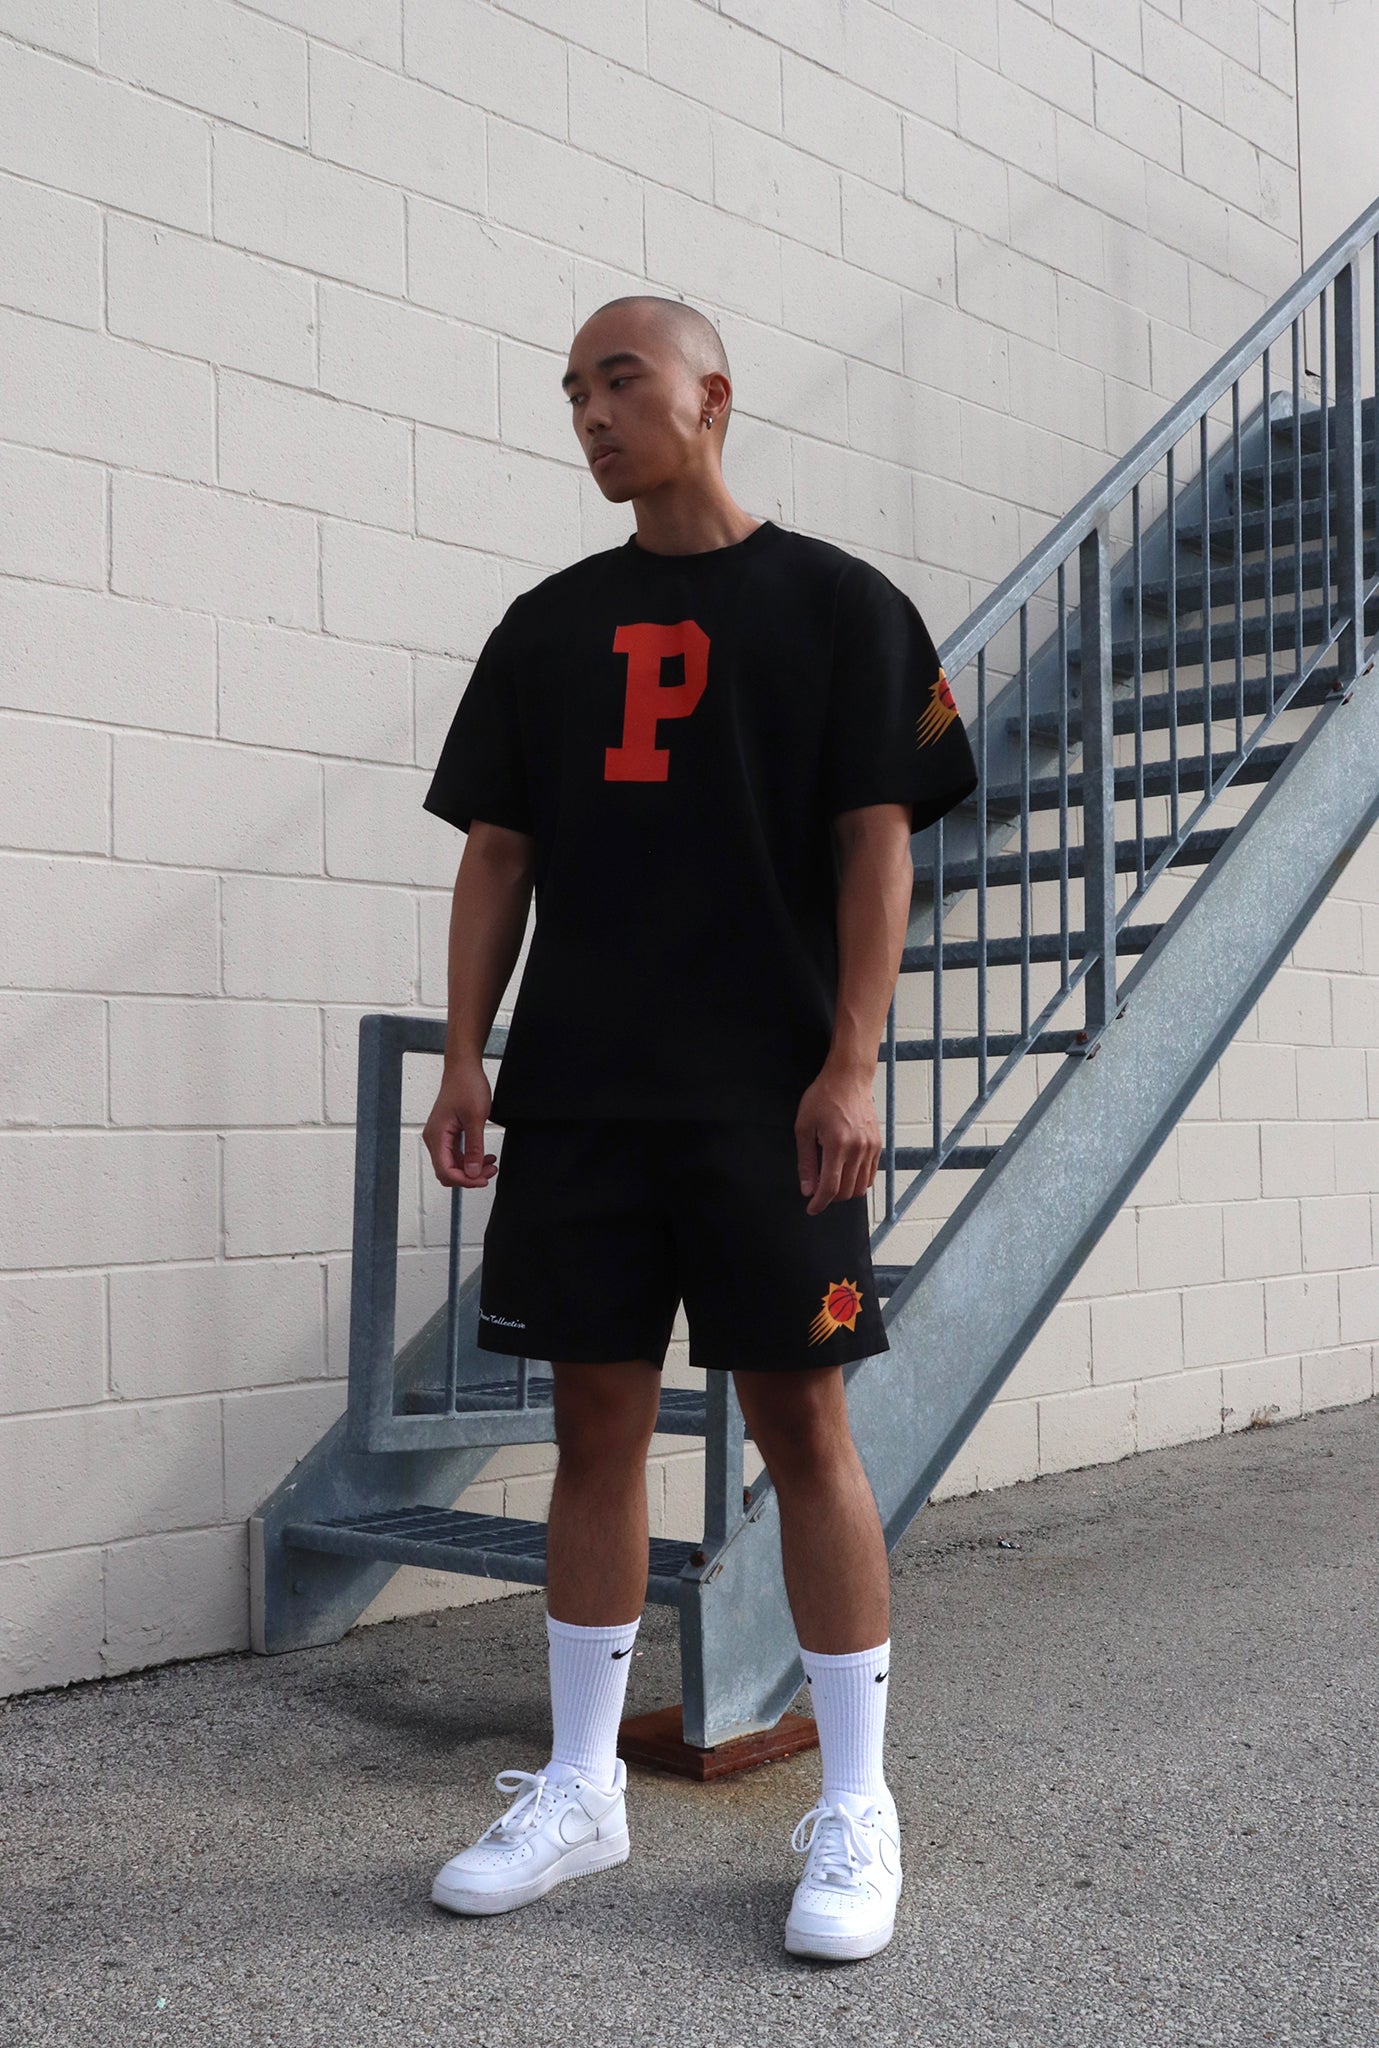 Phoenix Suns Shorts - Black